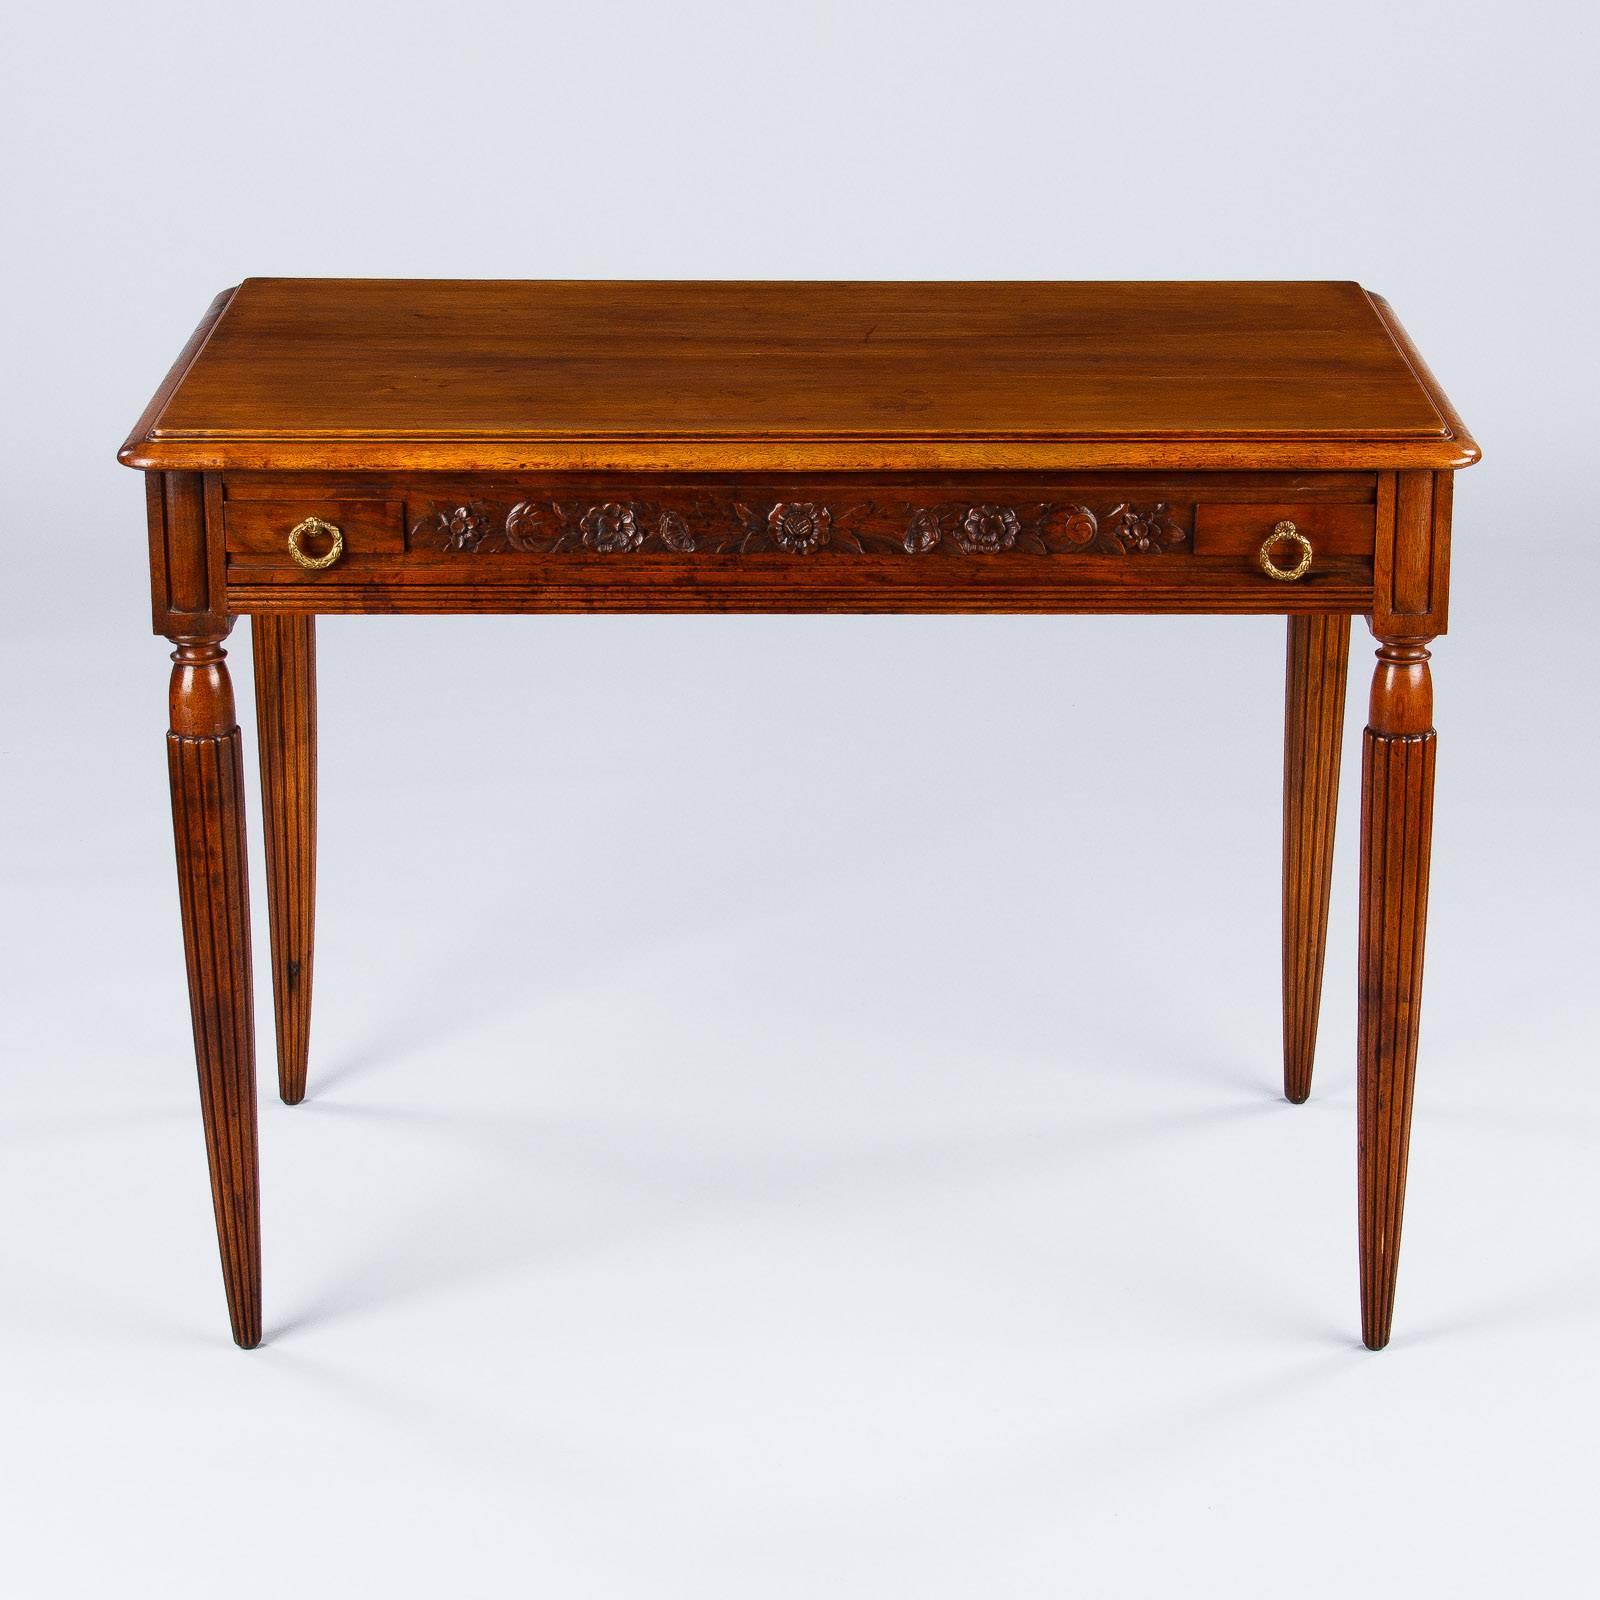 20th Century French Louis XVI Style Walnut Desk, Early 1900s